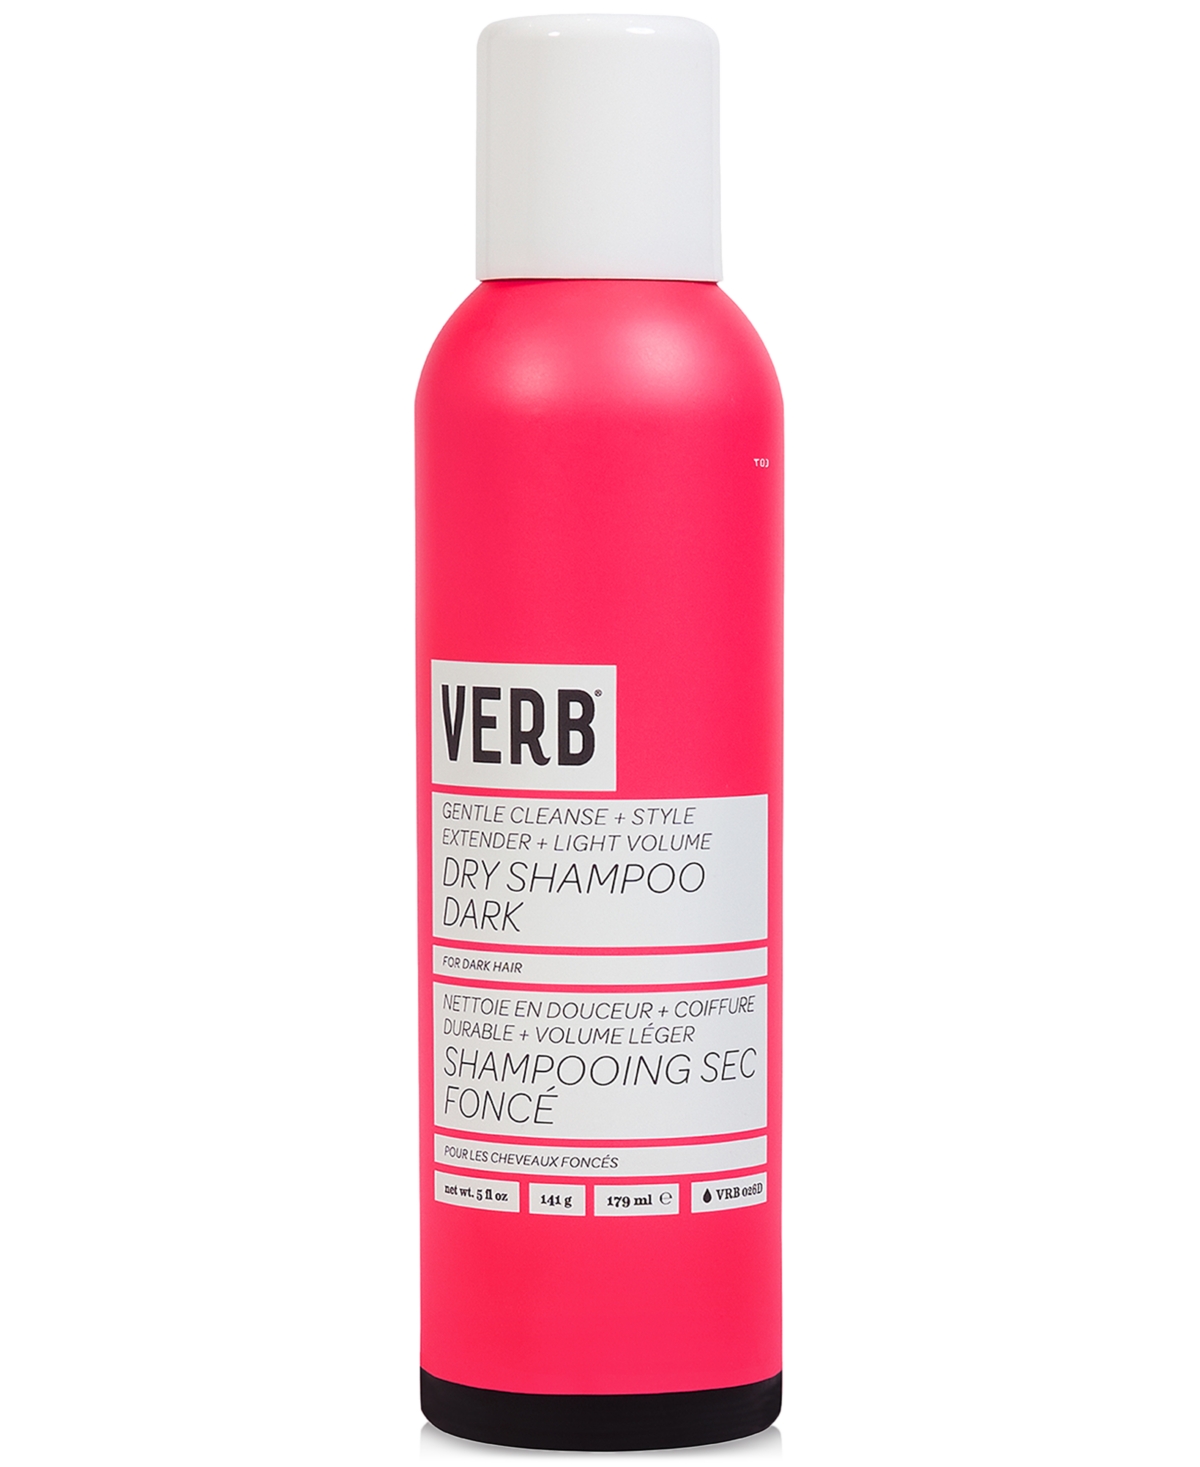 Verb Dry Shampoo For Dark Hair 5.0 oz / 179 ml